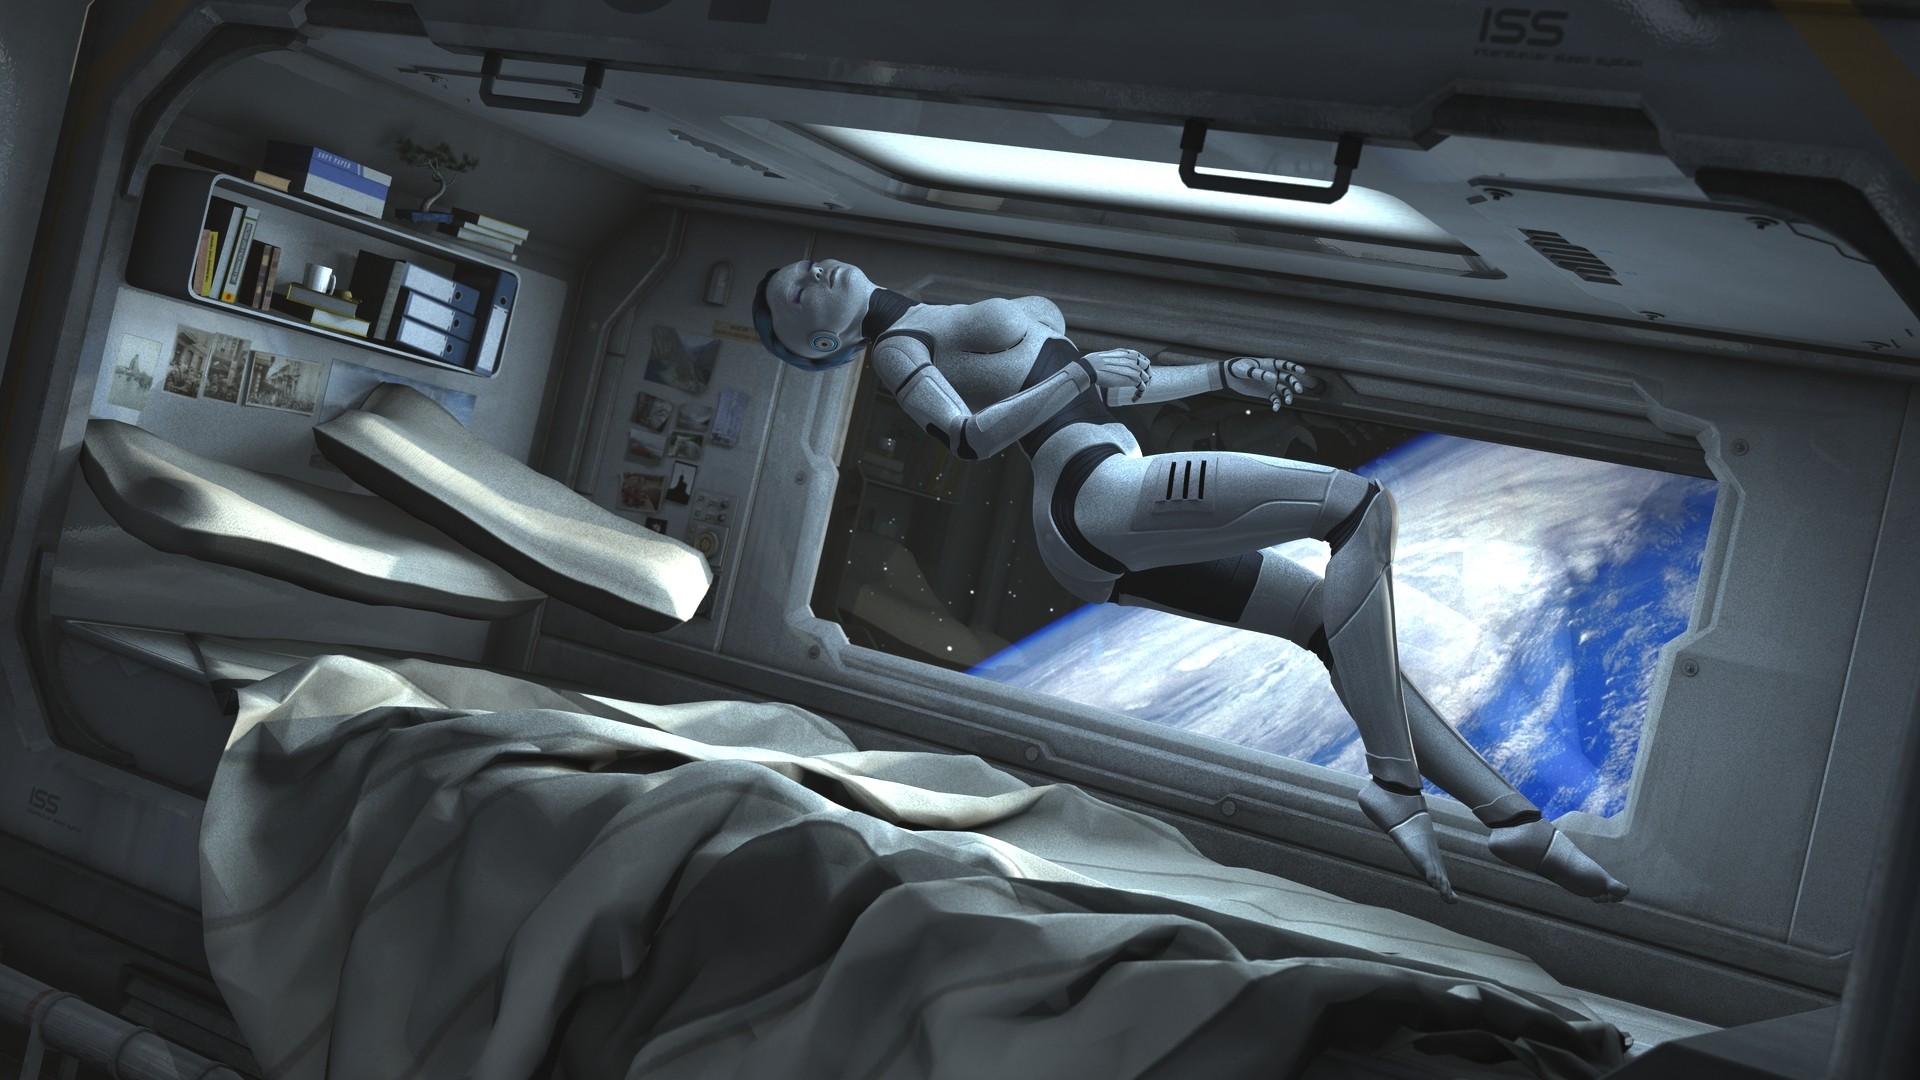 General 1920x1080 robot cyborg spaceship cabin space women zero gravity Earth bed artwork futuristic fantasy art Gynoid science fiction